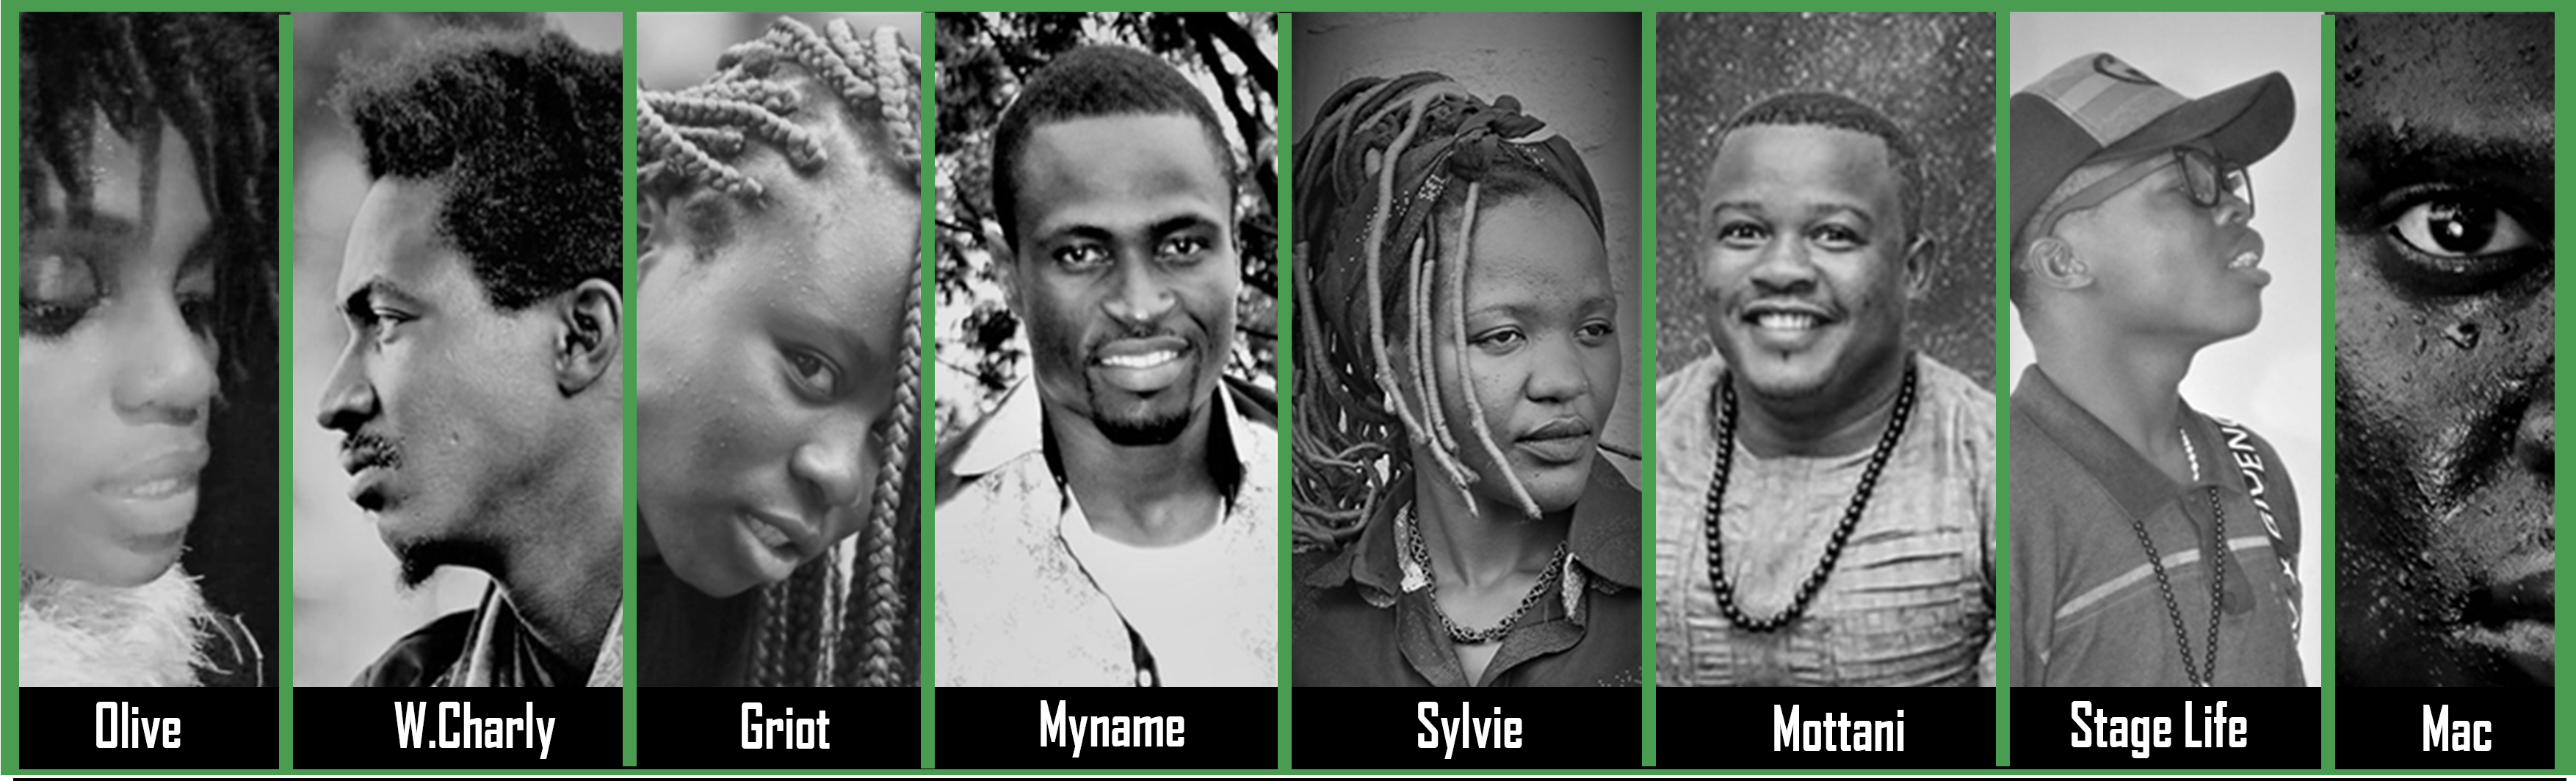 8 Best Spoken Word Artists from Cameroon - Africa